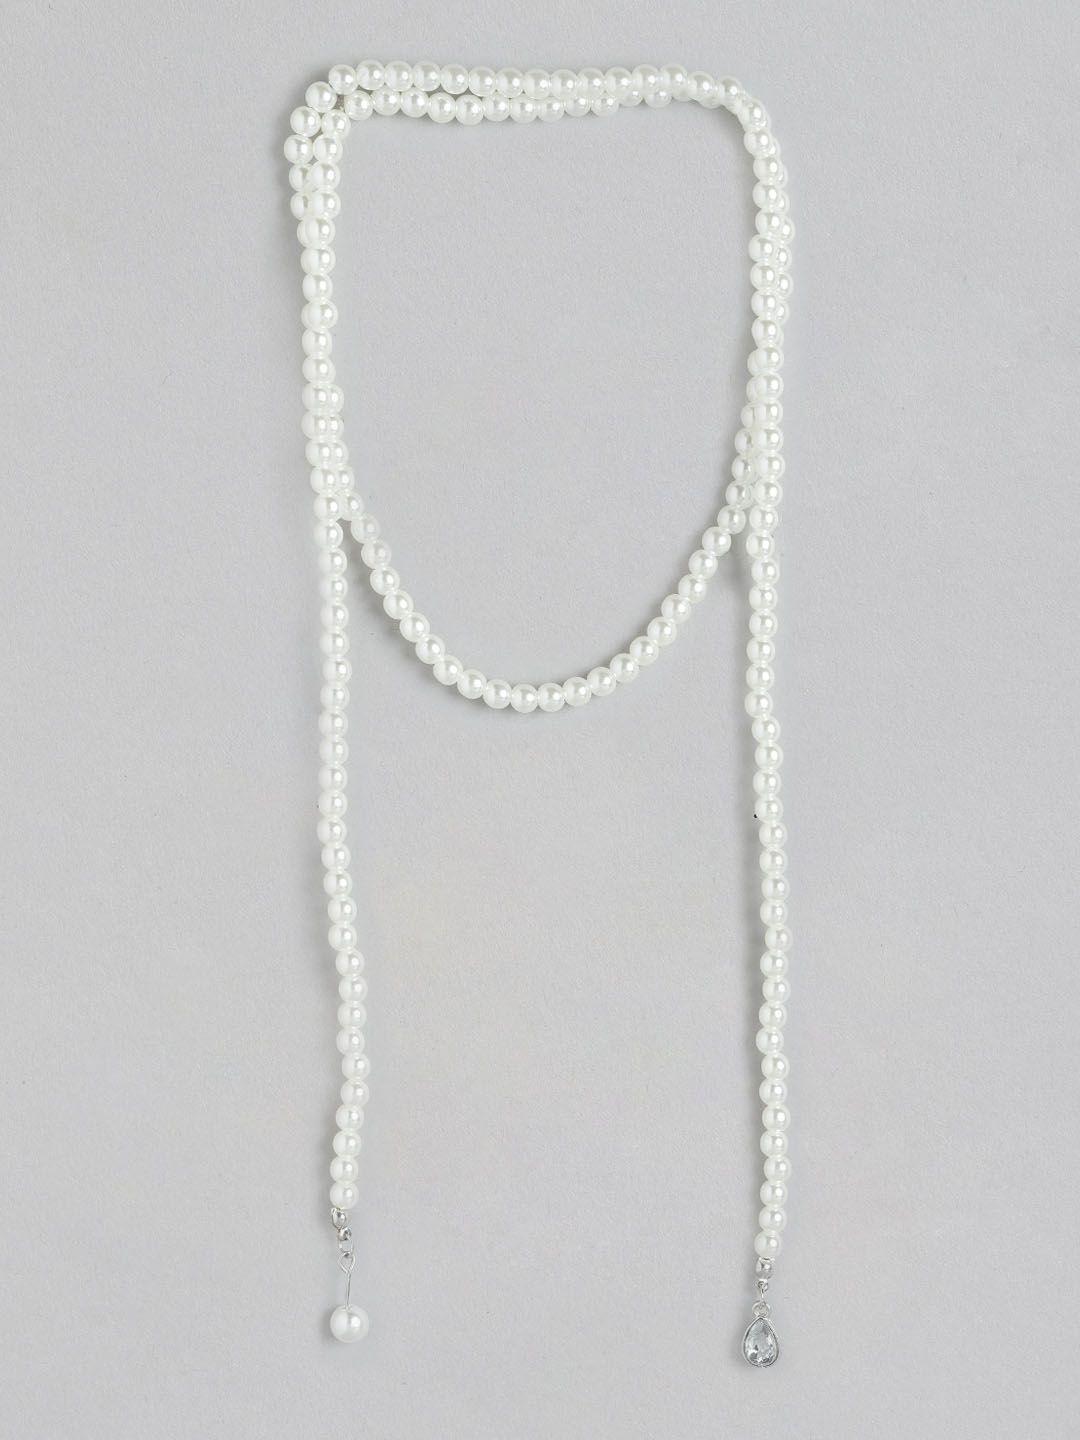 carlton london rhodium-plated pearl necklace